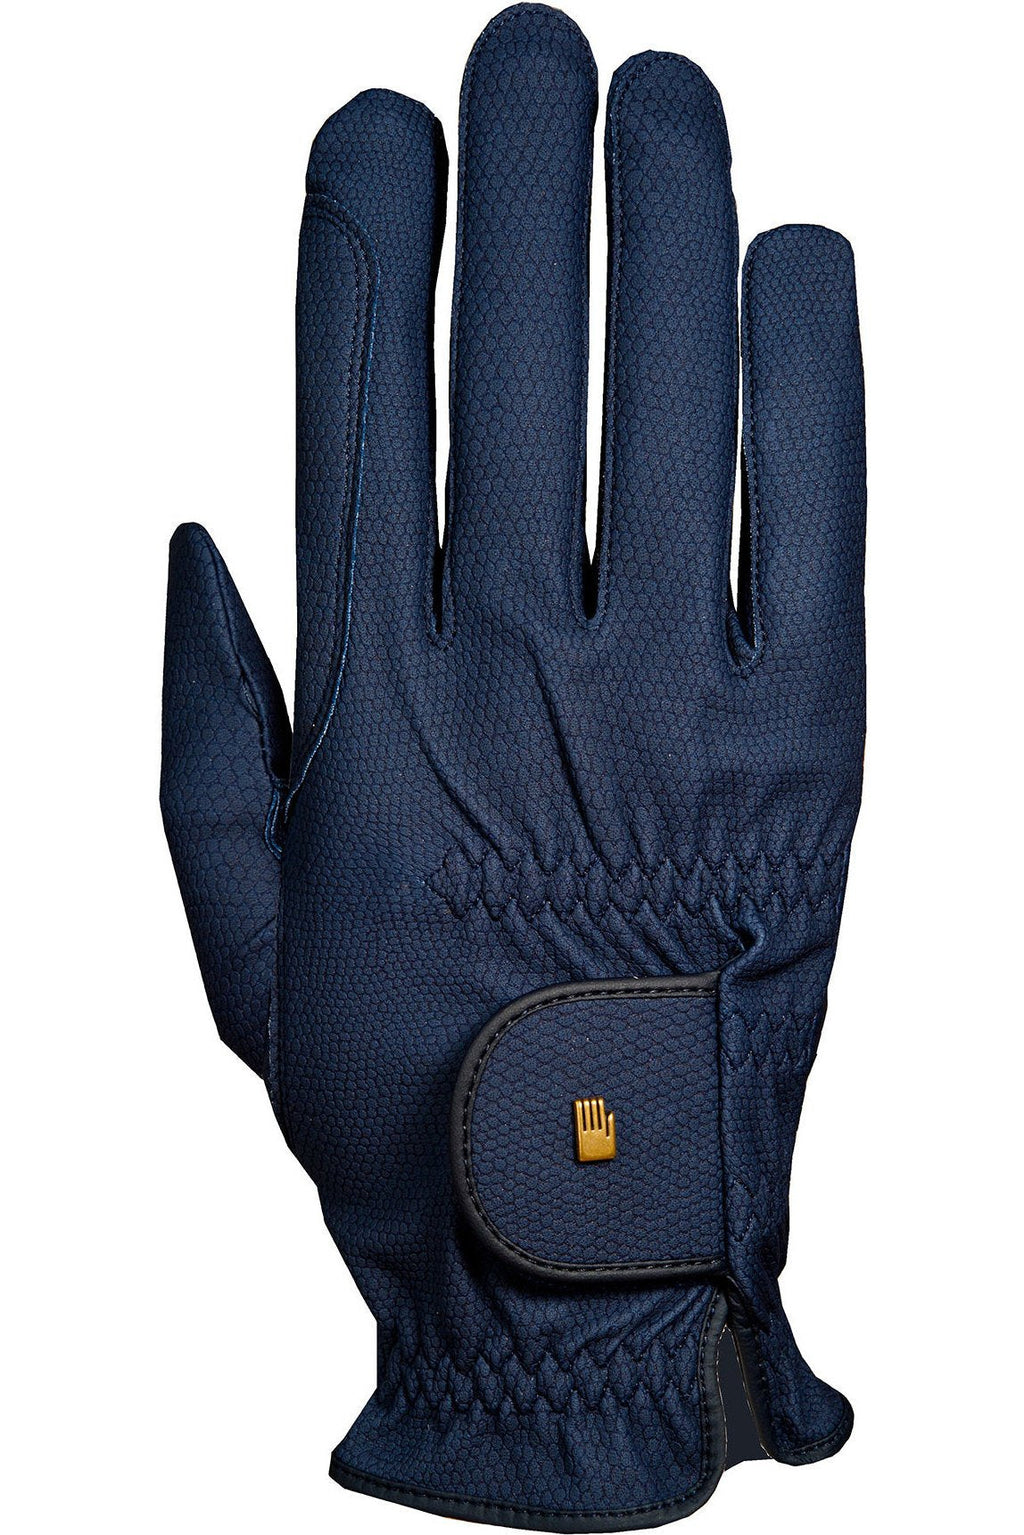 Roeckl Roeck-Grip Winter Unisex Gloves 6 anthracite - BeesActive Australia